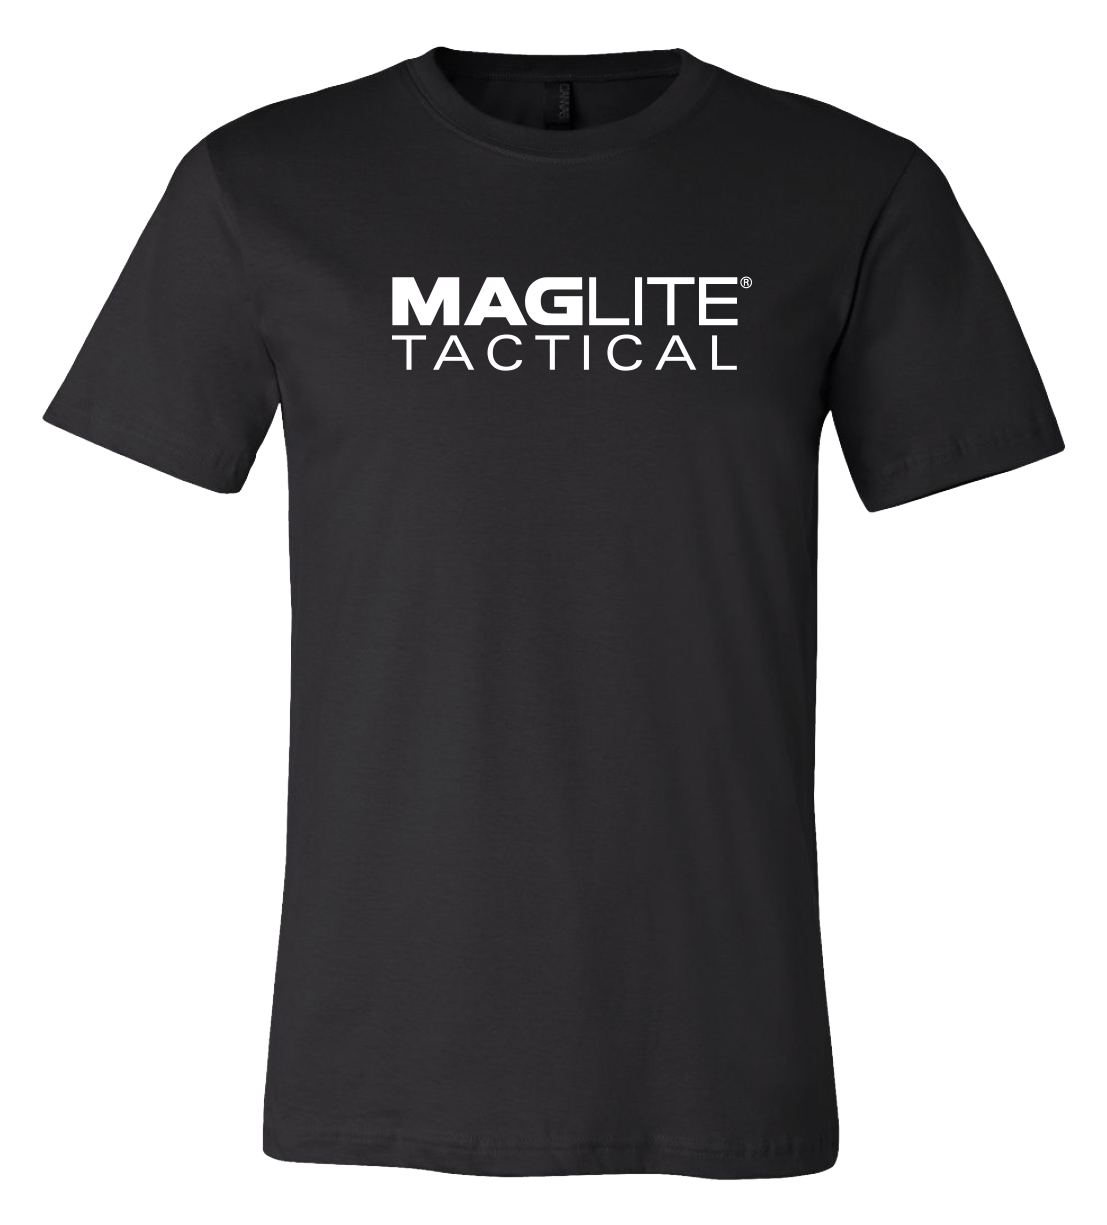 MAGLITE TACTICAL T-Shirt - Black